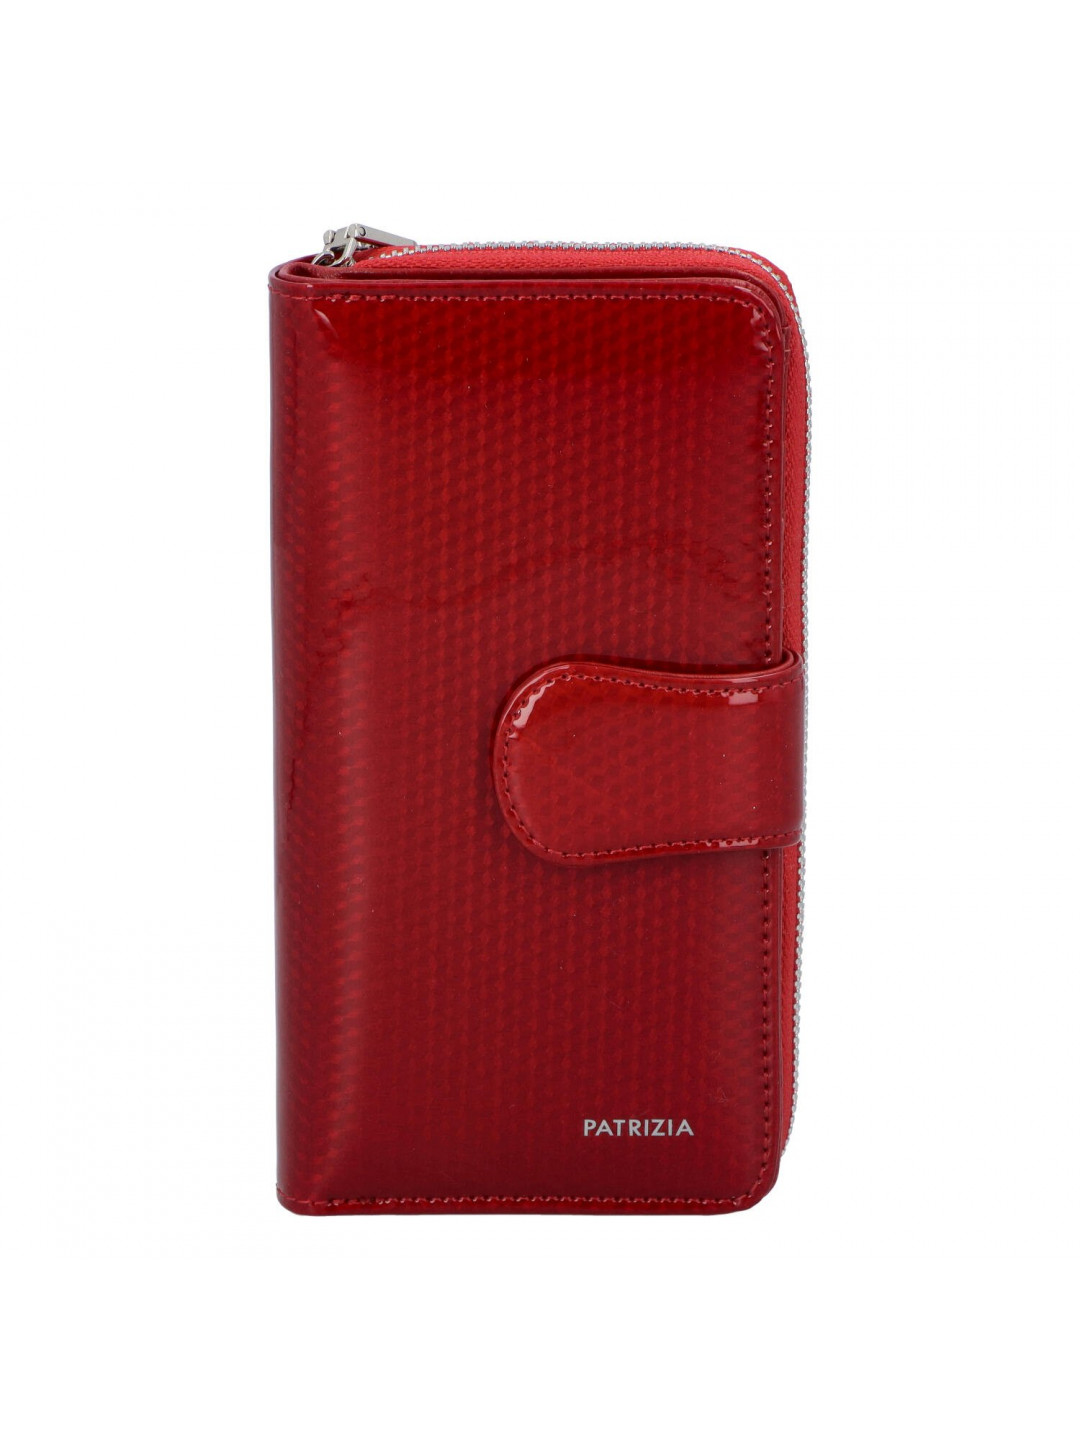 Dámská kožená peněženka červená – Patrizia Natasha